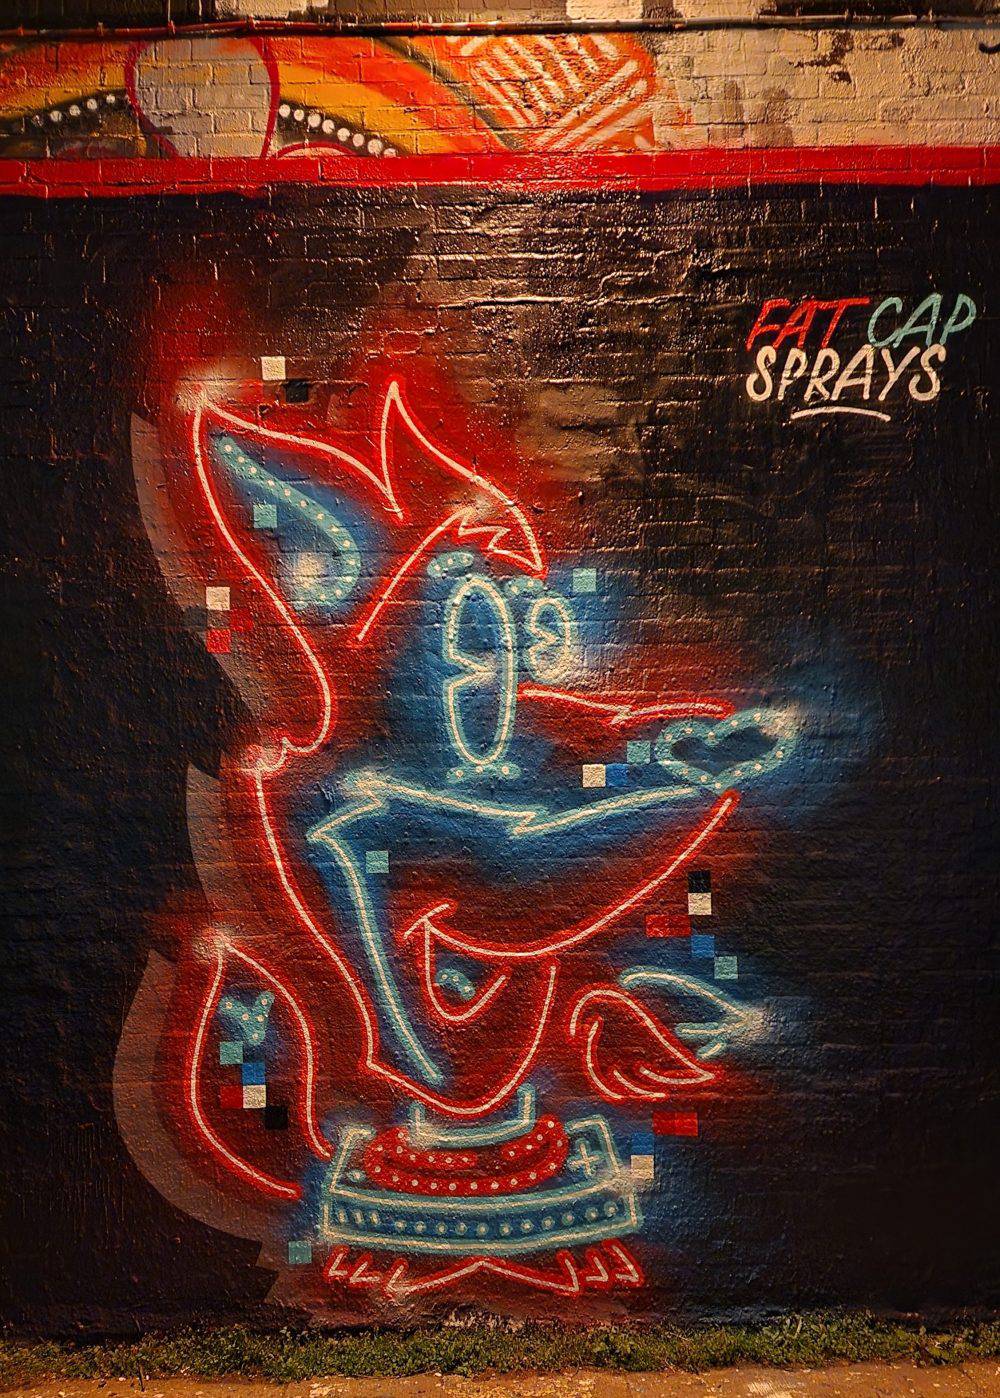 Star de TikTok, le street artist Fat Cap Sprays collabore avec Samsung et son nouveau Galaxy SS22 Ultra